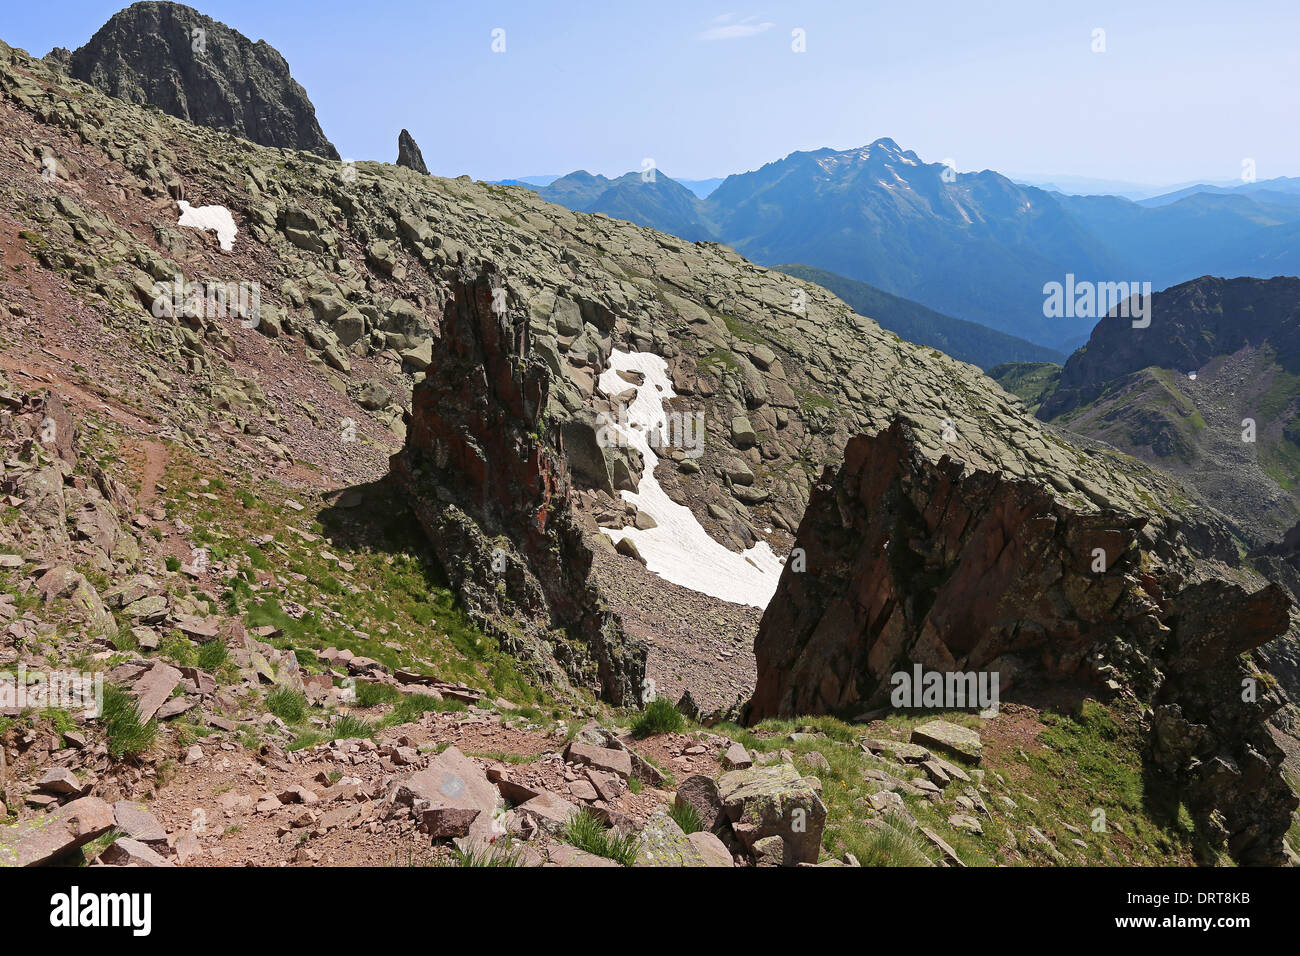 The Lagorai mountin group. Porphyry rocks near Cima Cece peak. Trentino. Italian Alps. Europe. Stock Photo